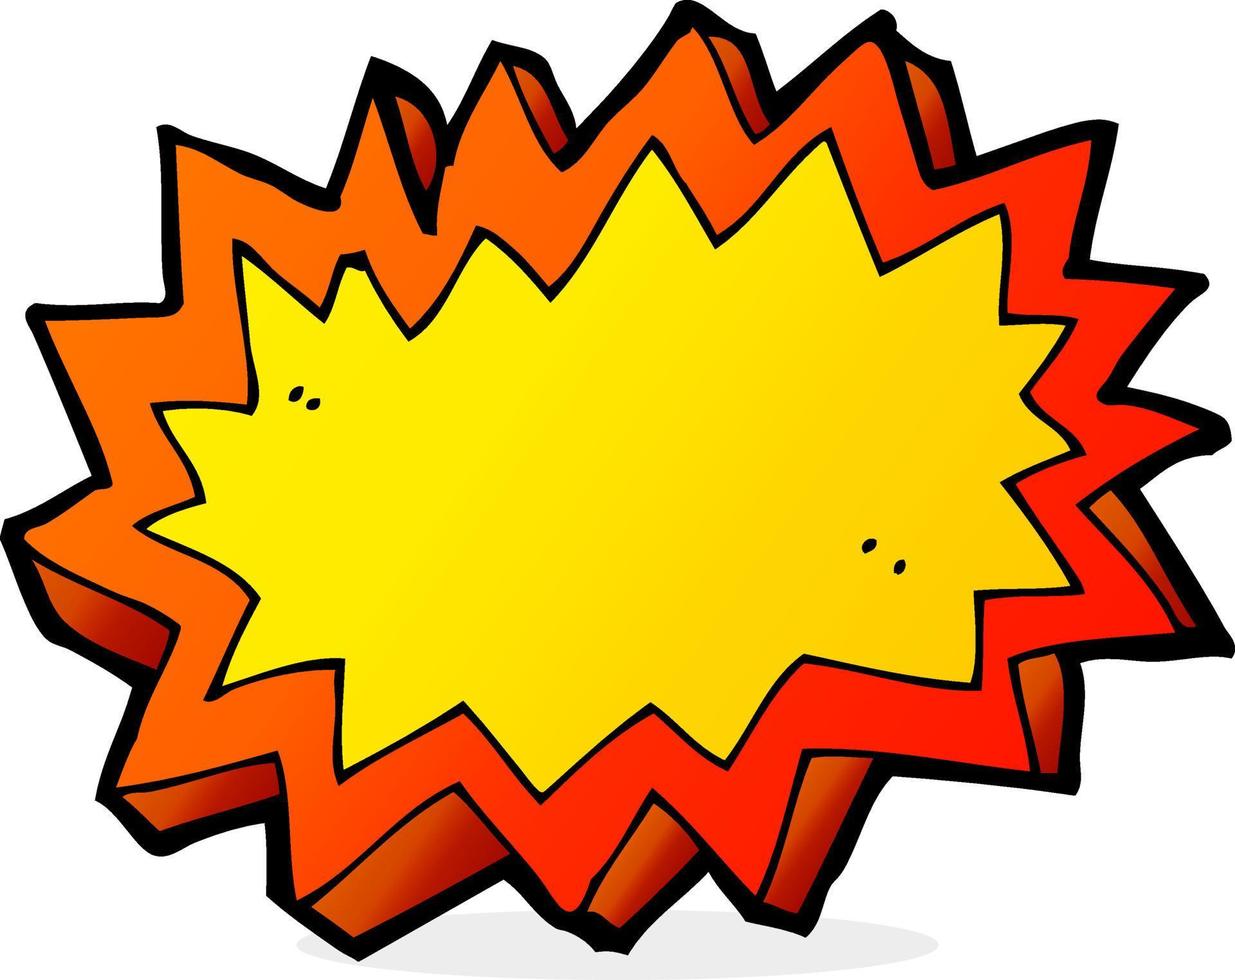 symbole d'explosion de dessin animé vecteur